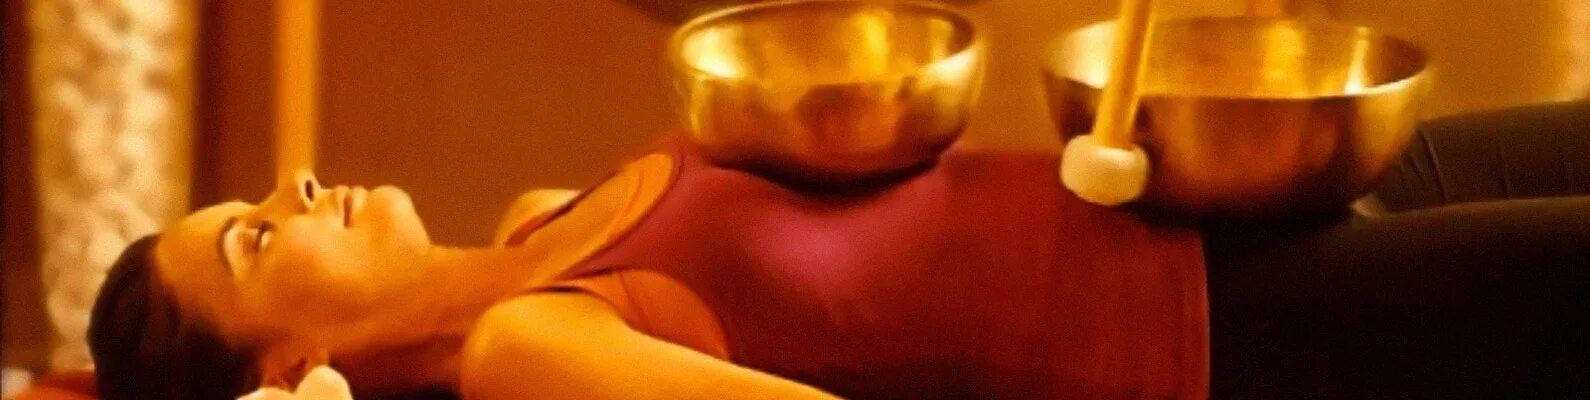 Слушать звуки чаши. Вибромассаж тибетскими чашами. Вибрационный массаж тибетскими чашами. Поющие чаши. Звукотерапия. Тибетские Поющие чаши массаж.